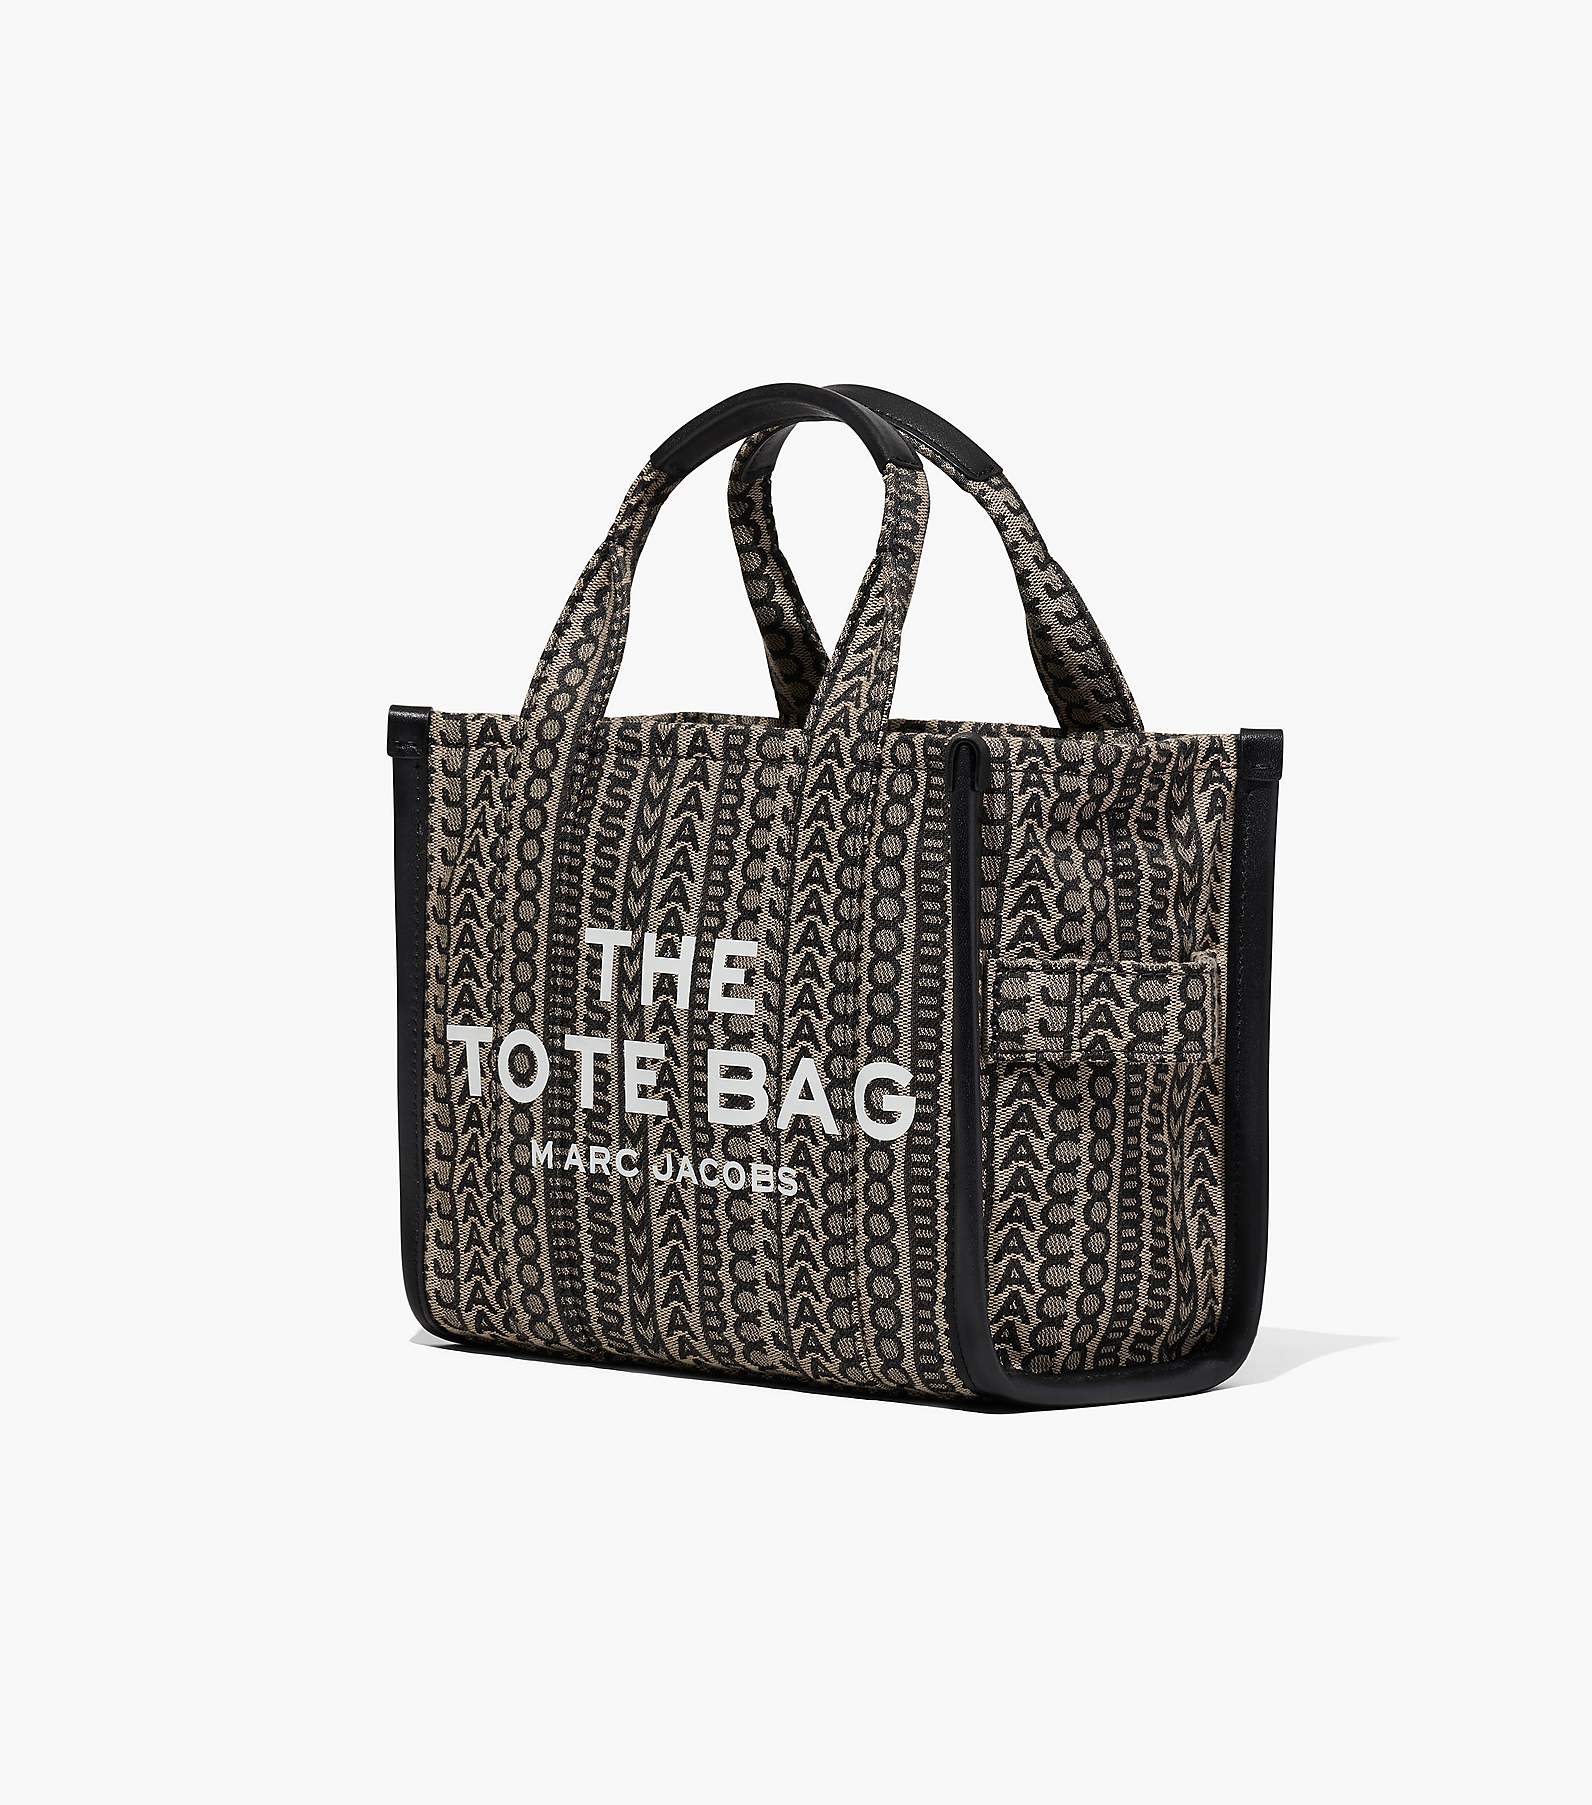 The Monogram Small Tote Bag